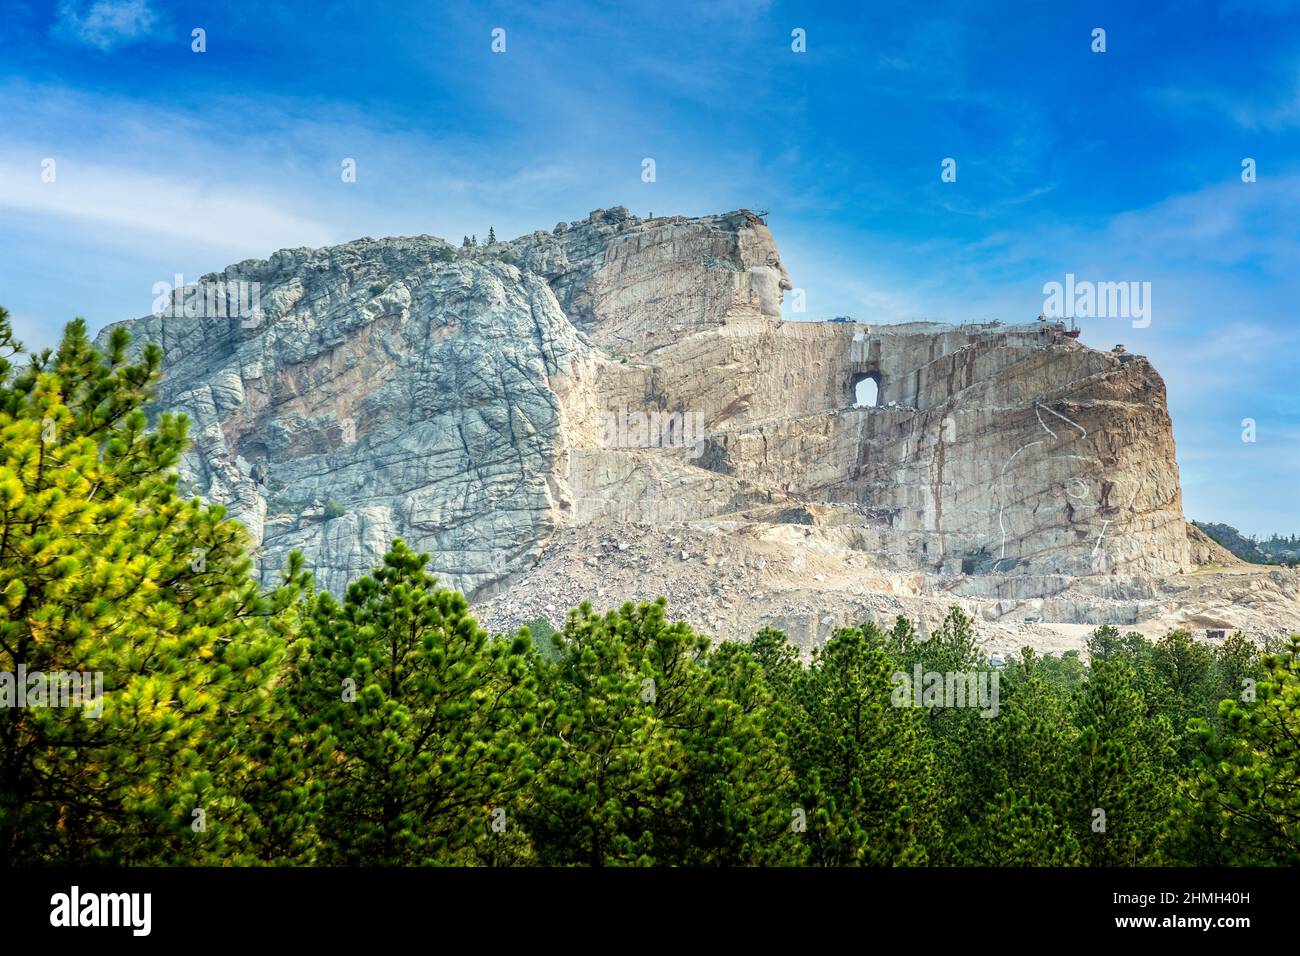 Das Crazy Horse Memorial Monument in South Dakota, ein indisches Kulturerbe-Denkmal Stockfoto